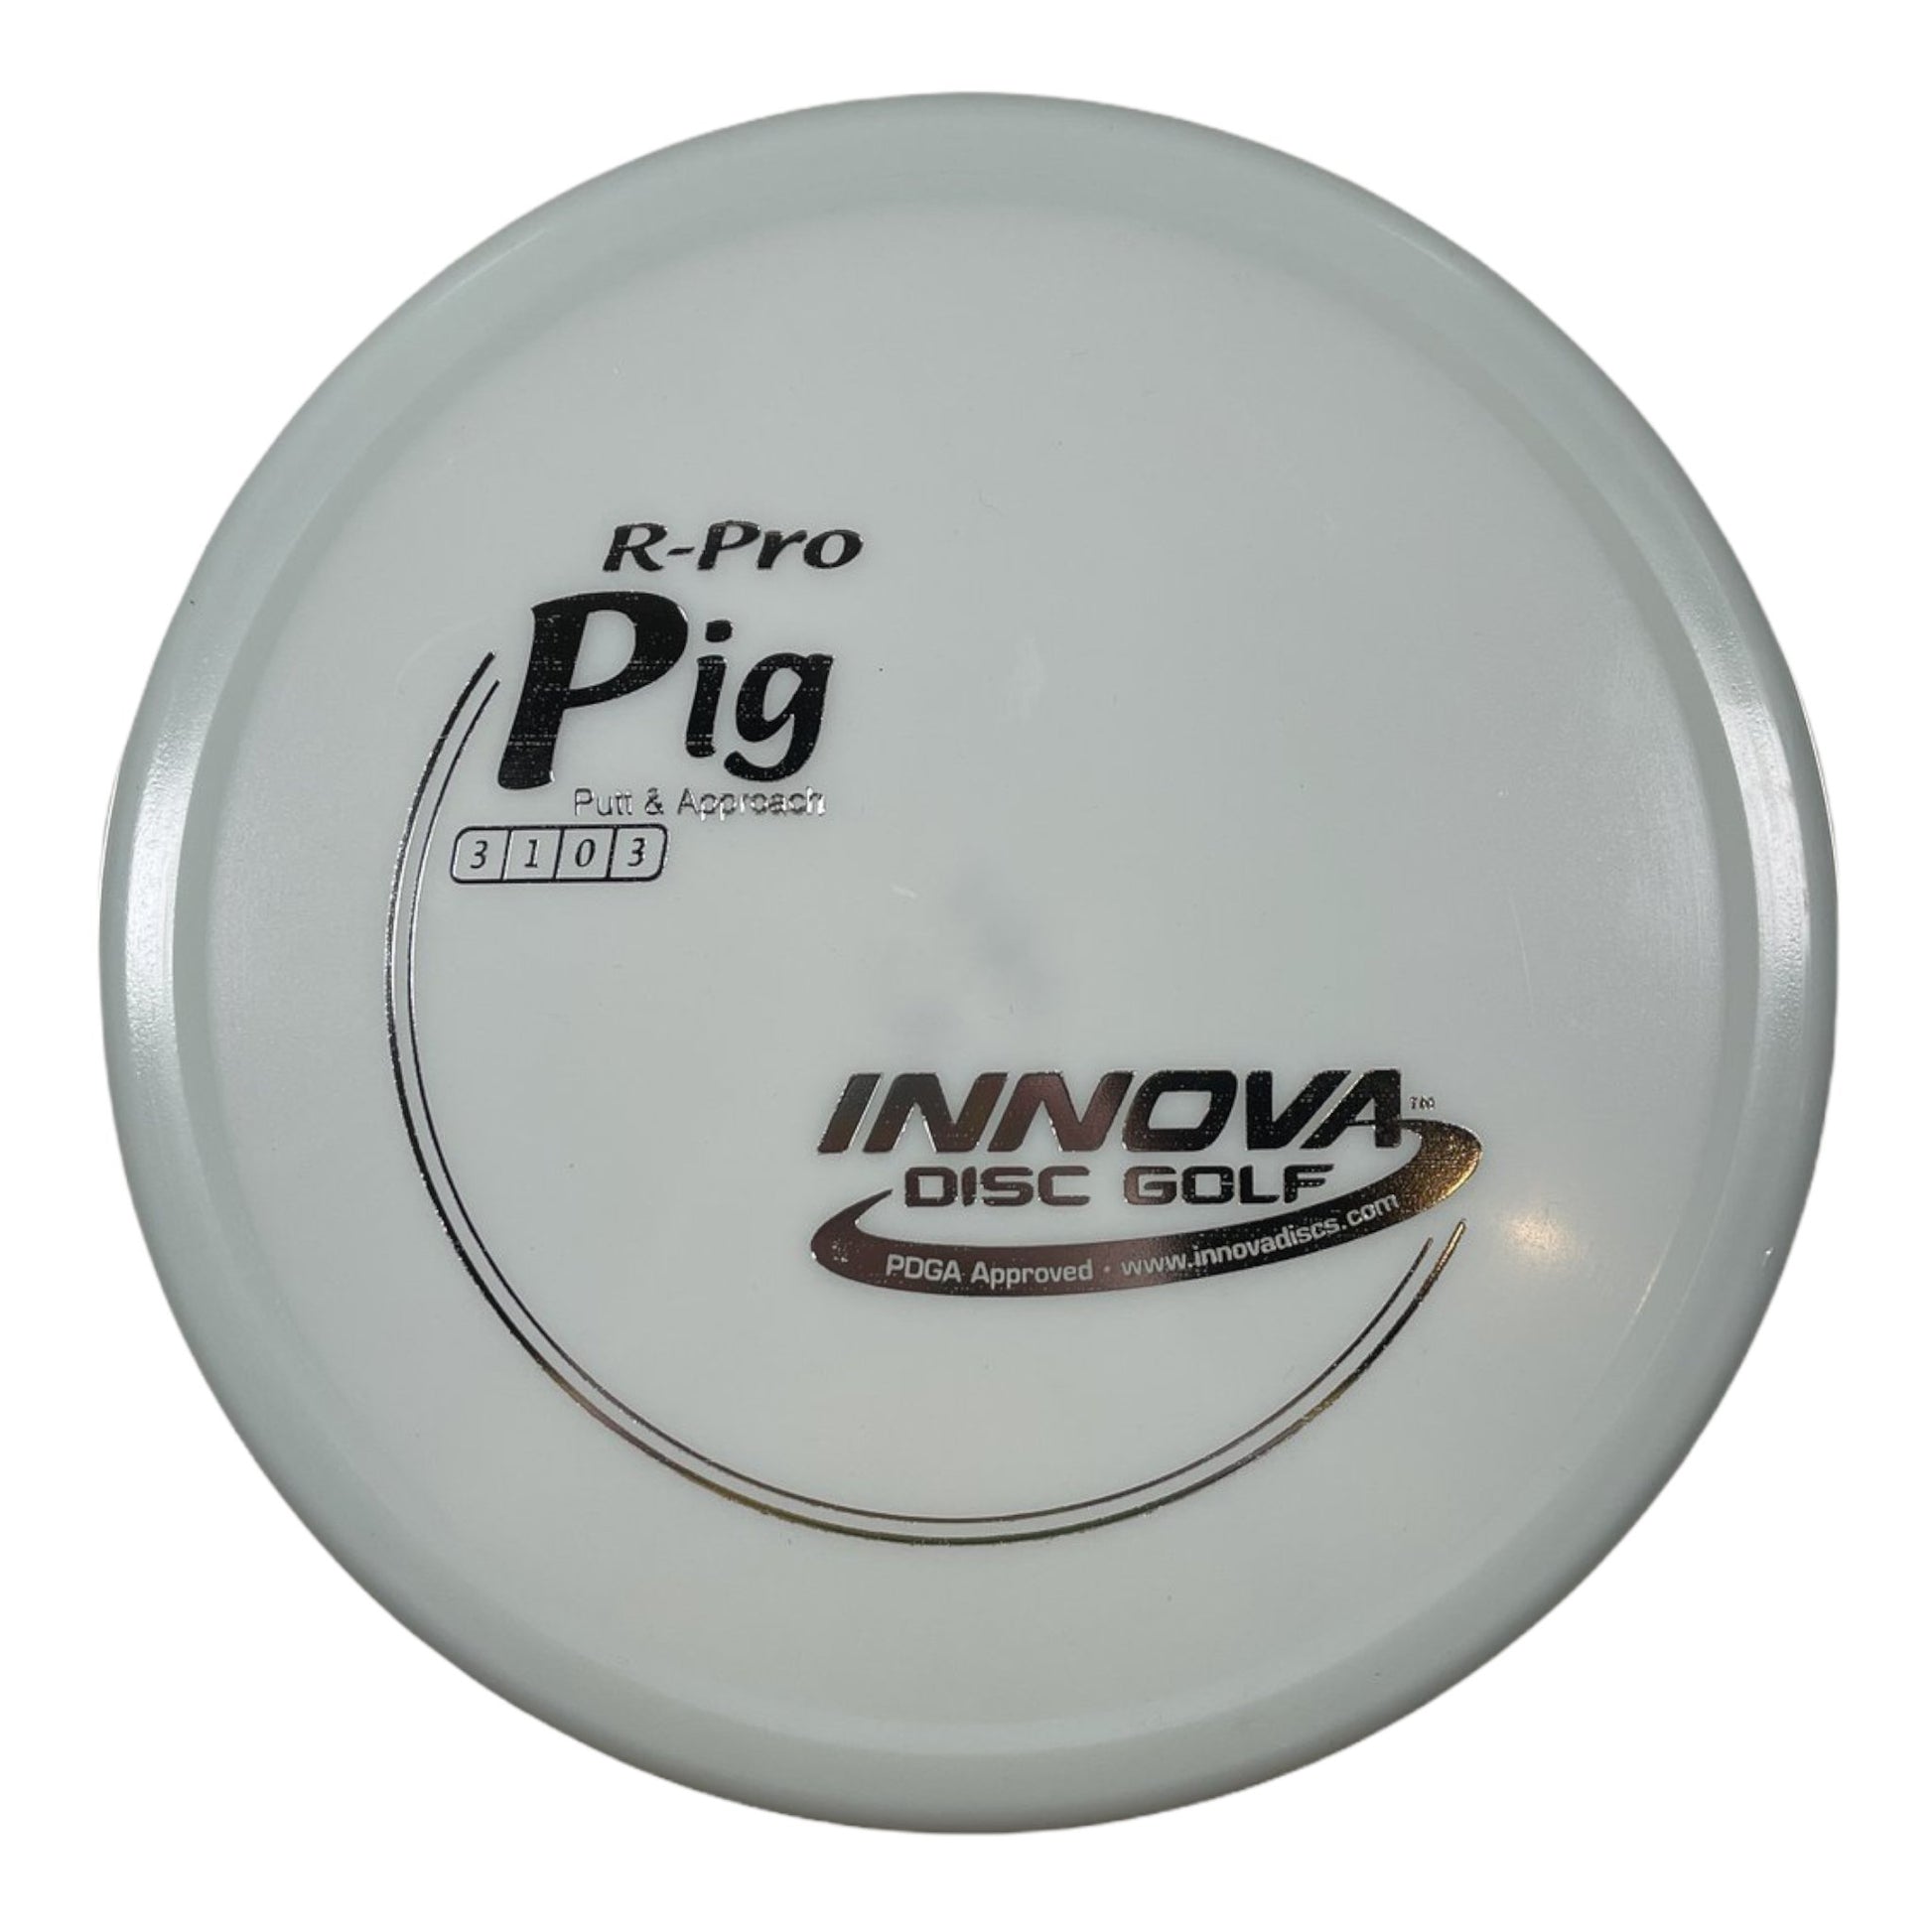 Innova Champion Discs Pig | R-Pro | White/Silver 170g Disc Golf